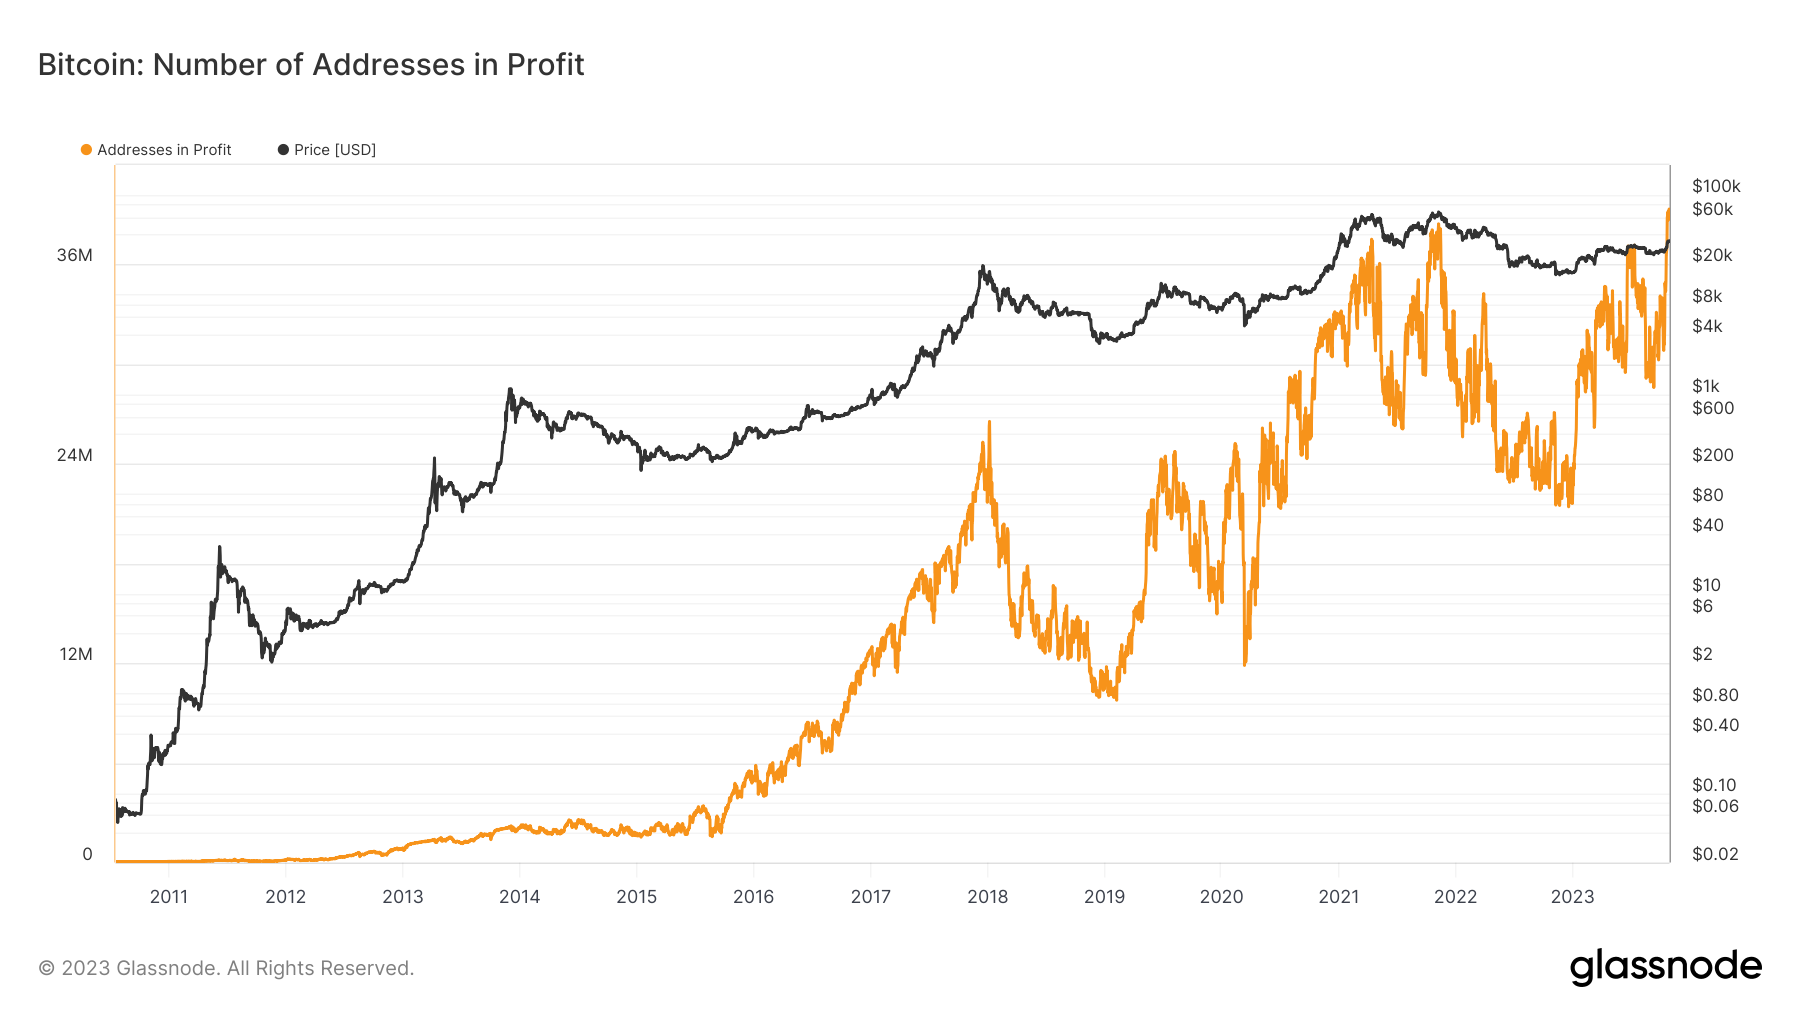 Bitcoin addresses in profit chart. Source: Glassnode